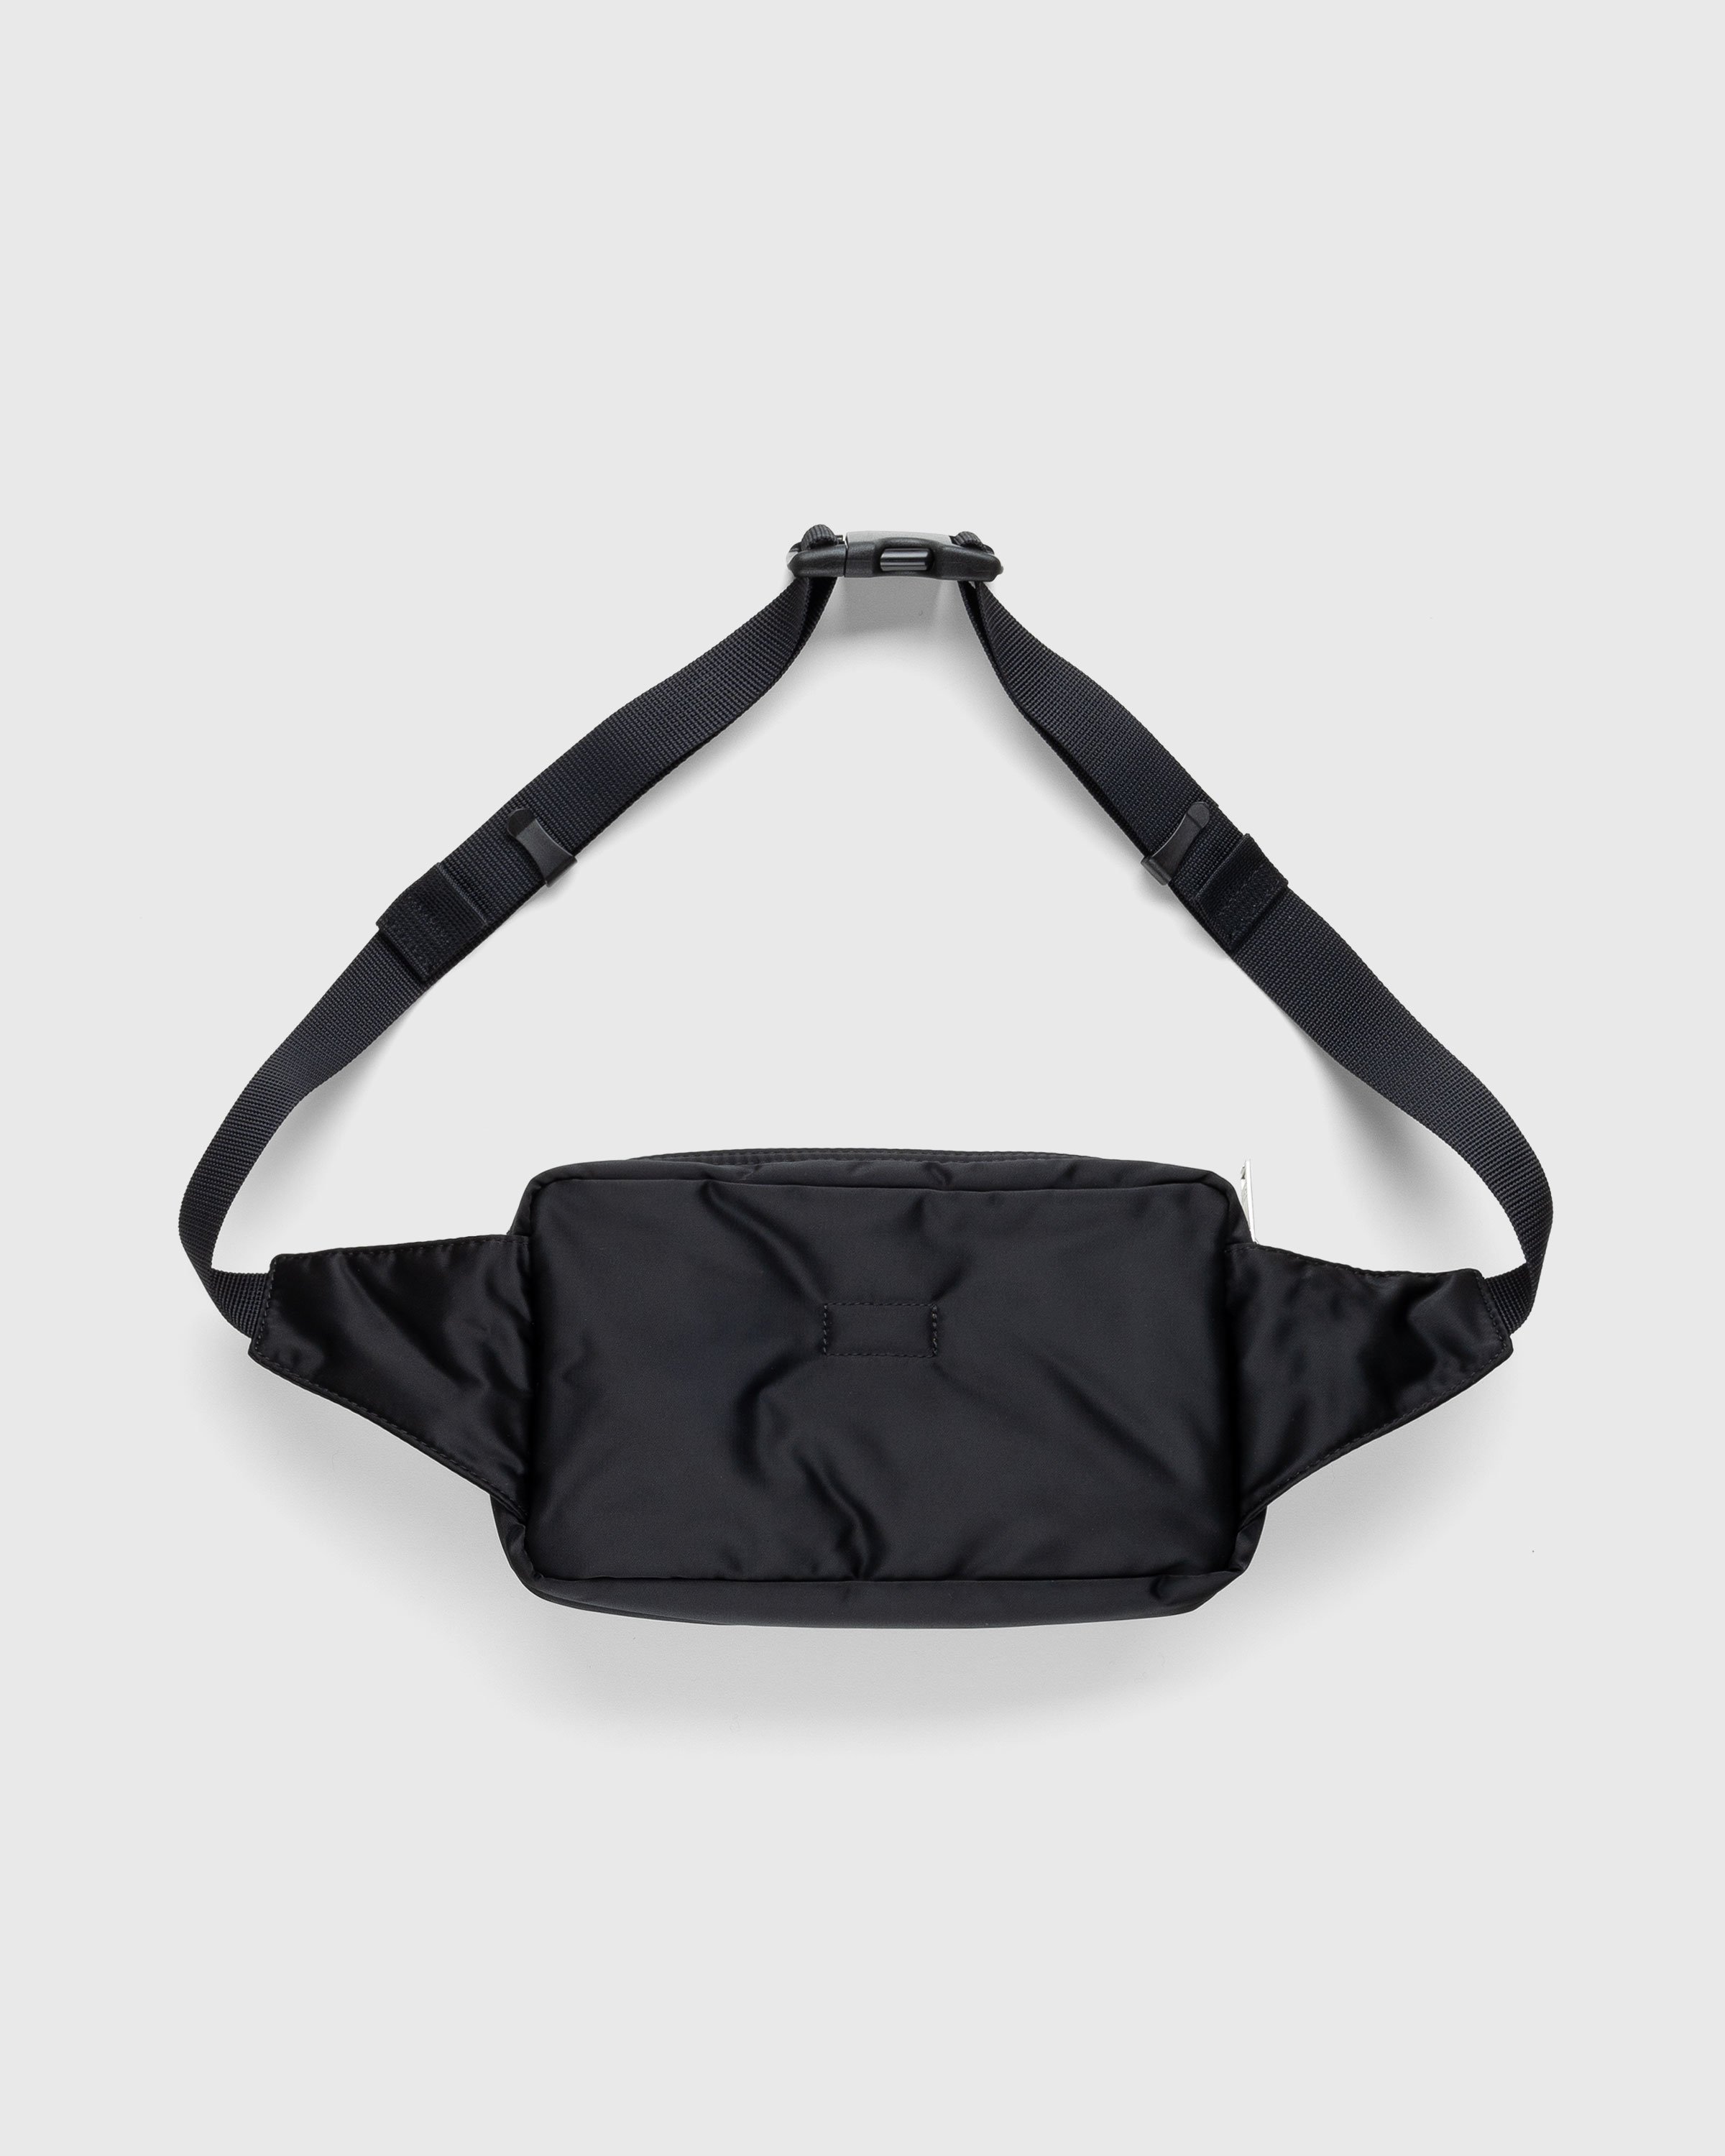 Porter-Yoshida & Co. – Tanker Waist Bag Black | Highsnobiety Shop